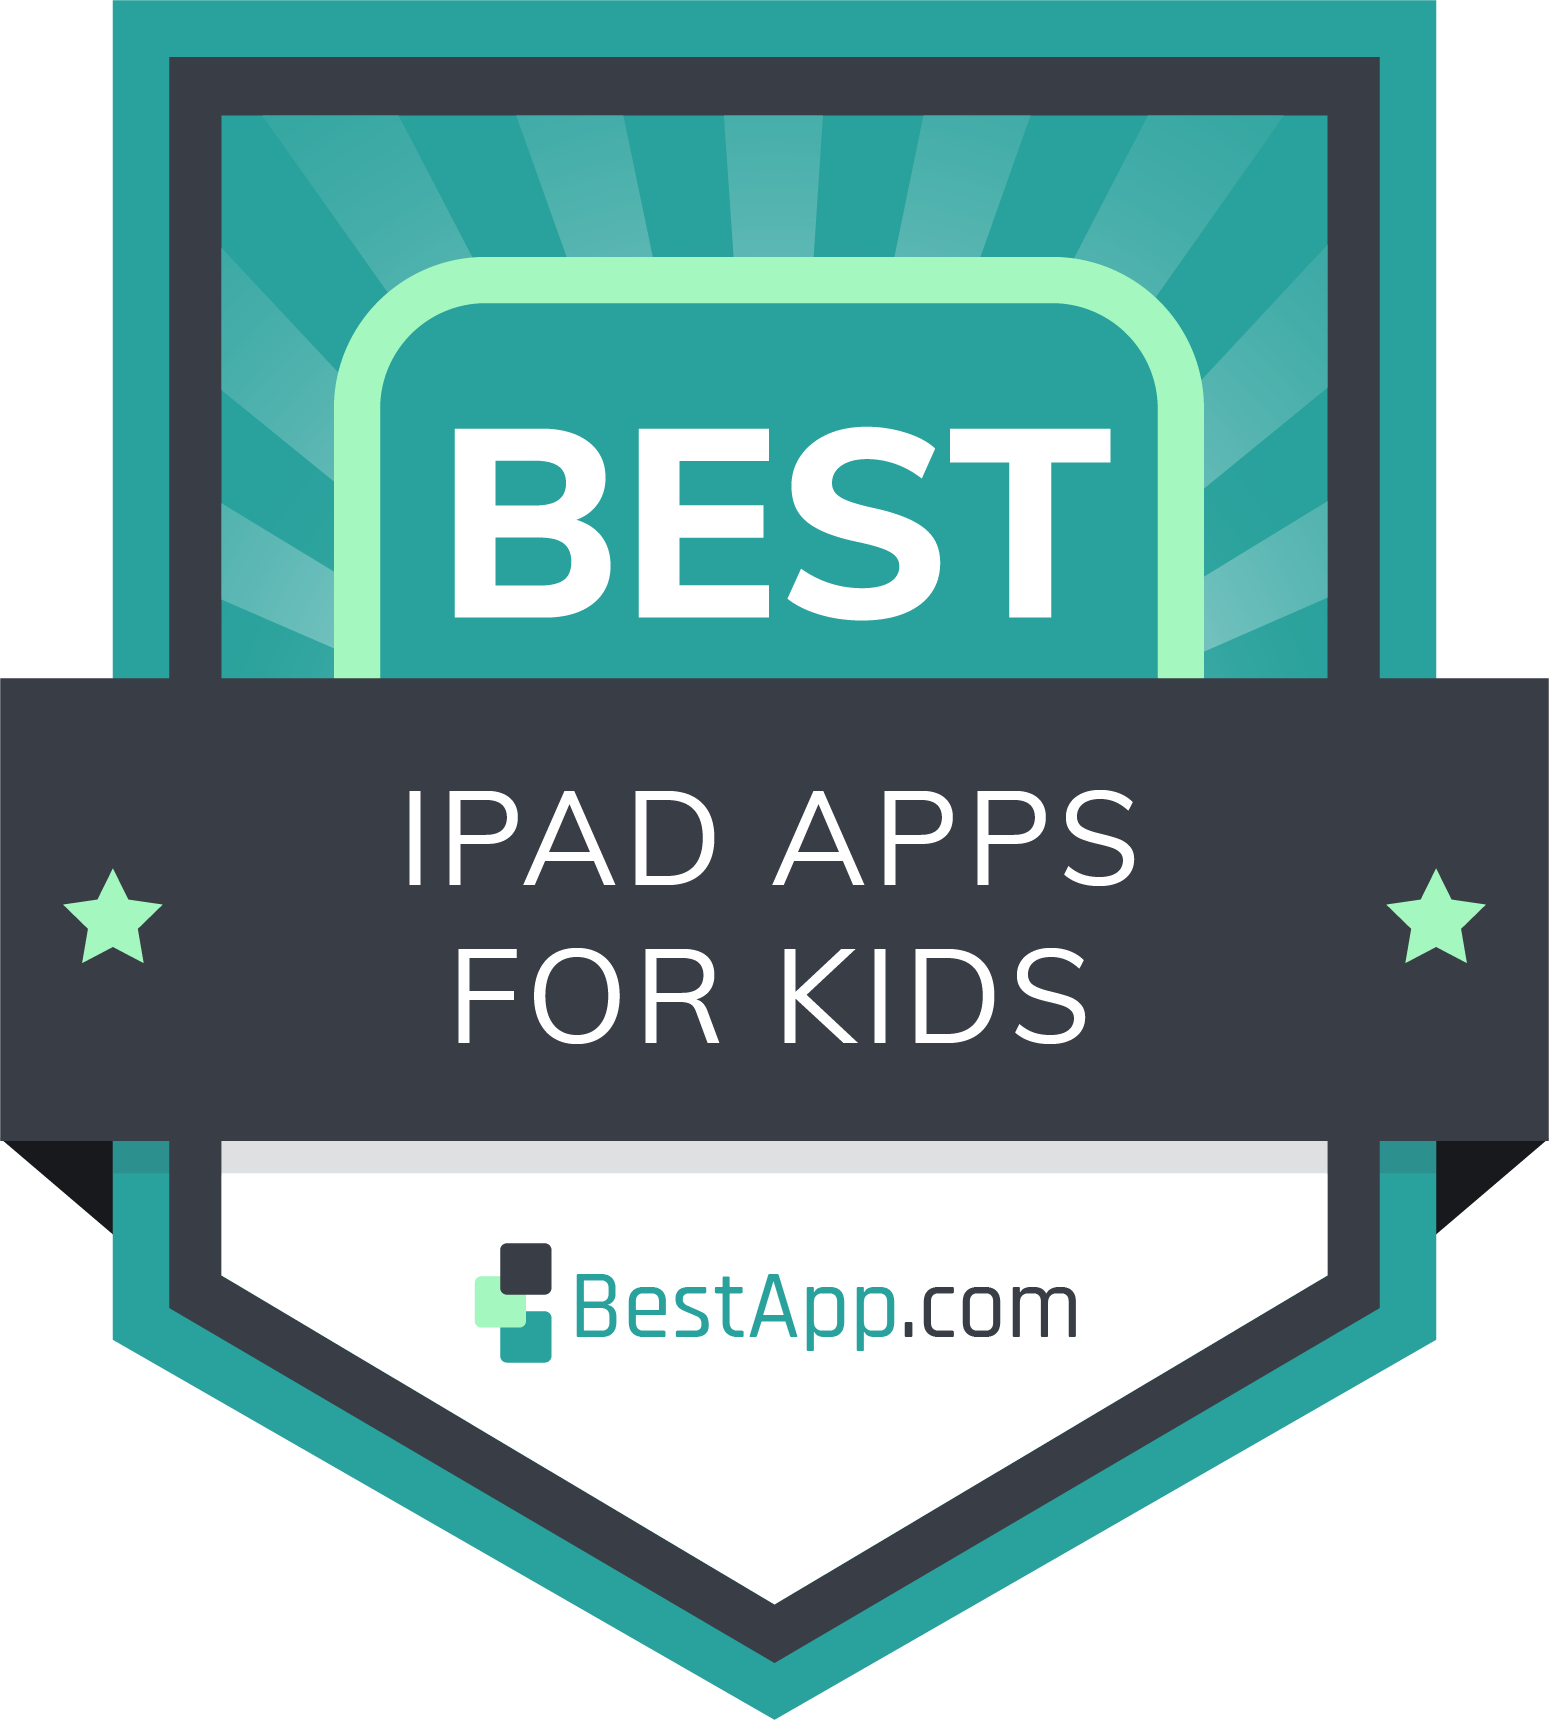 Best iPad Apps for Kids Badge